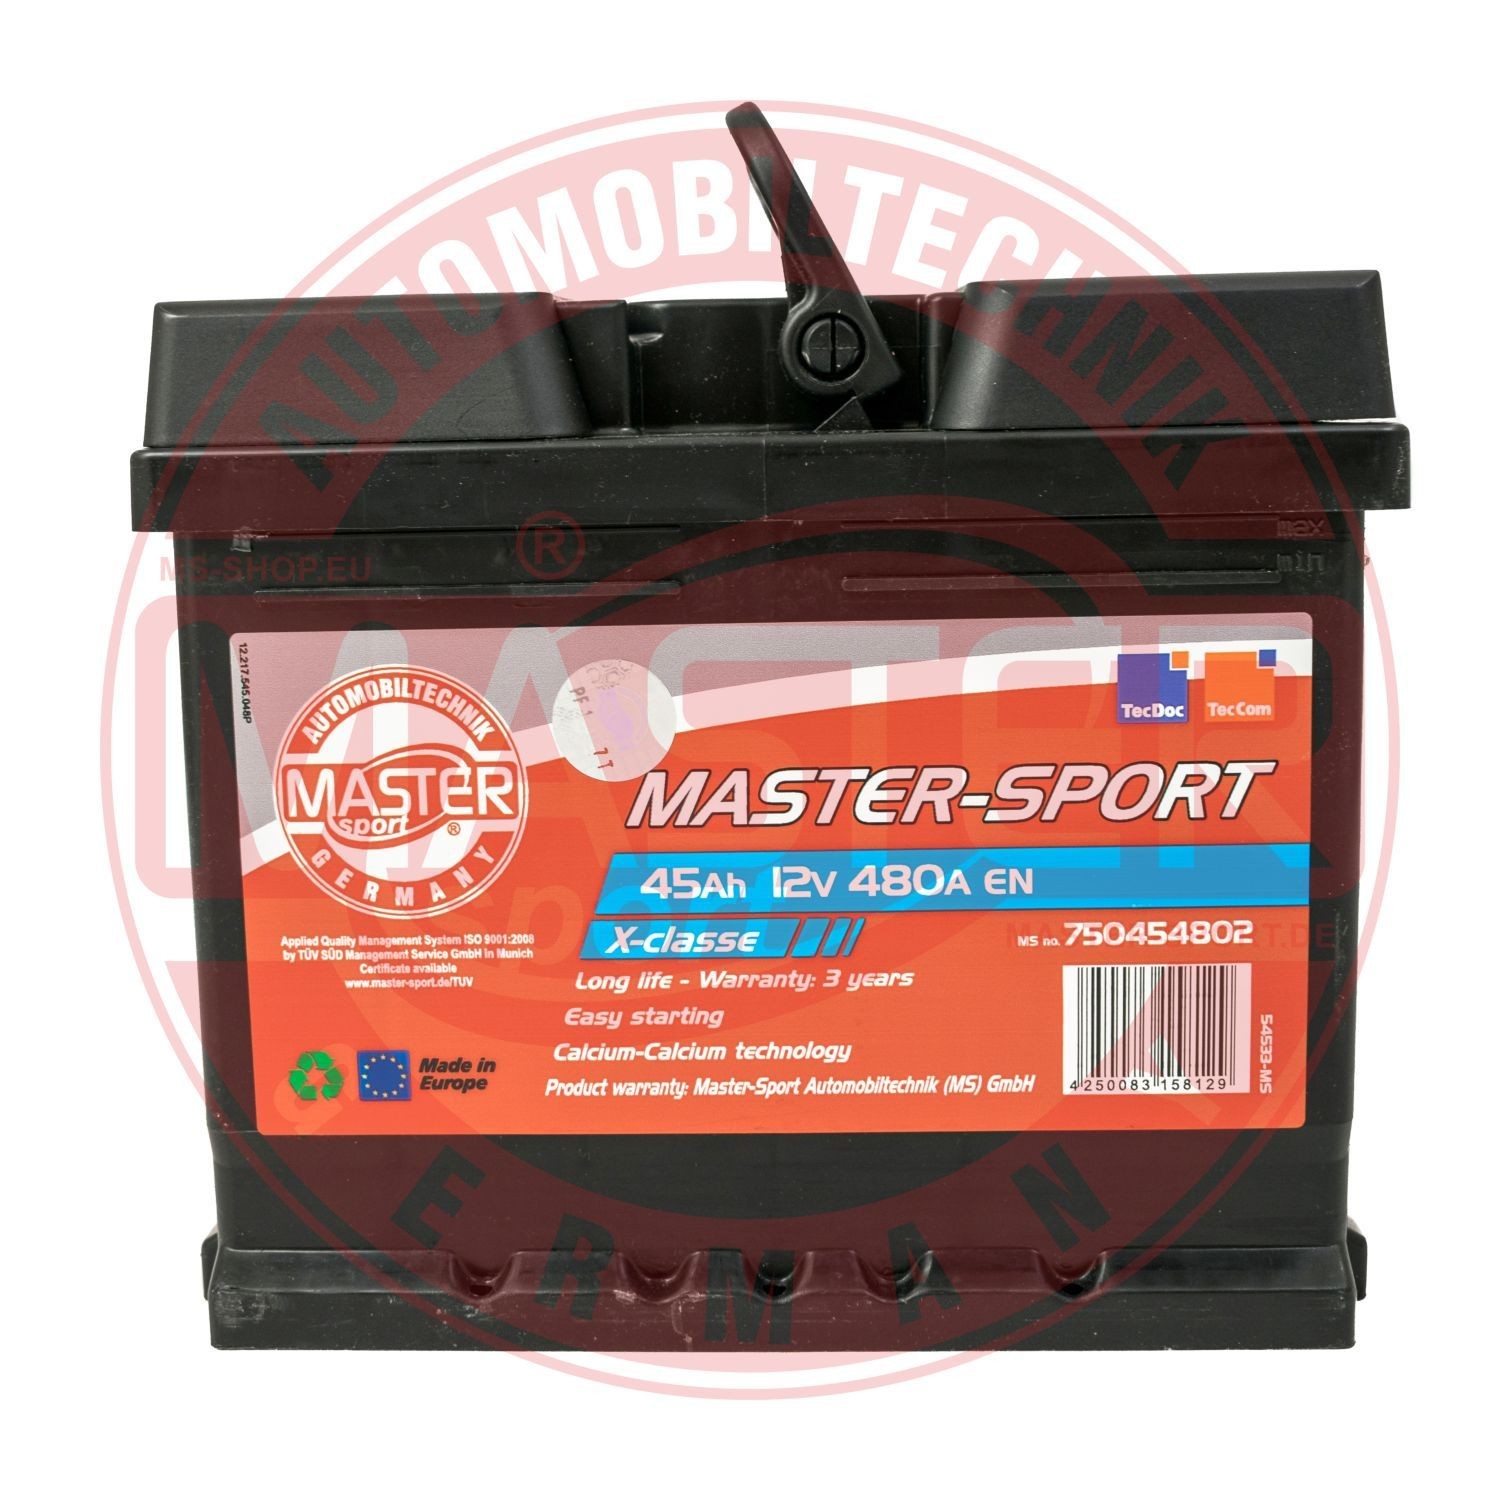 780454802 MASTER-SPORT Car battery FIAT 12V 45Ah 480A B13 LB1 Lead-acid battery